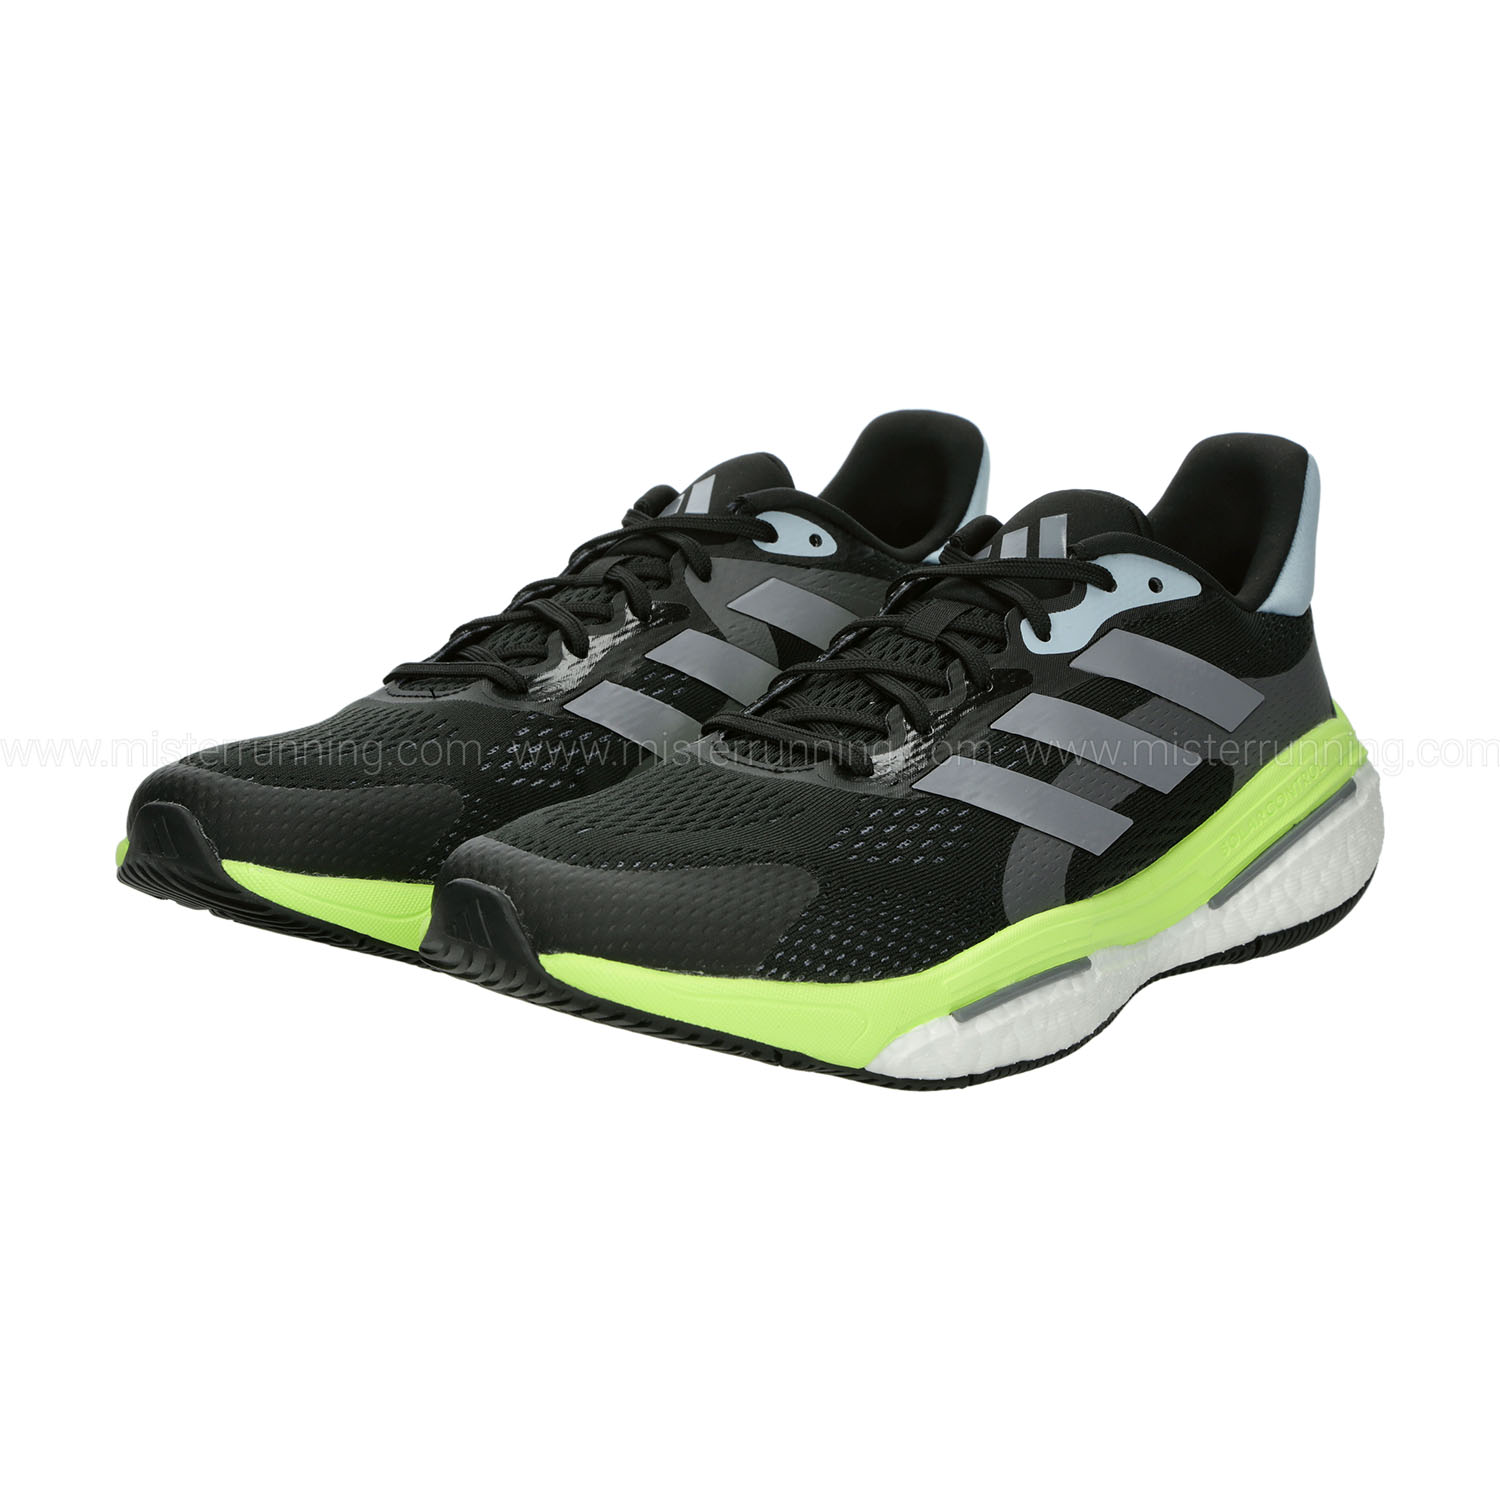 adidas Solarcontrol 2 Men's Running Shoes - Core Black/Grey